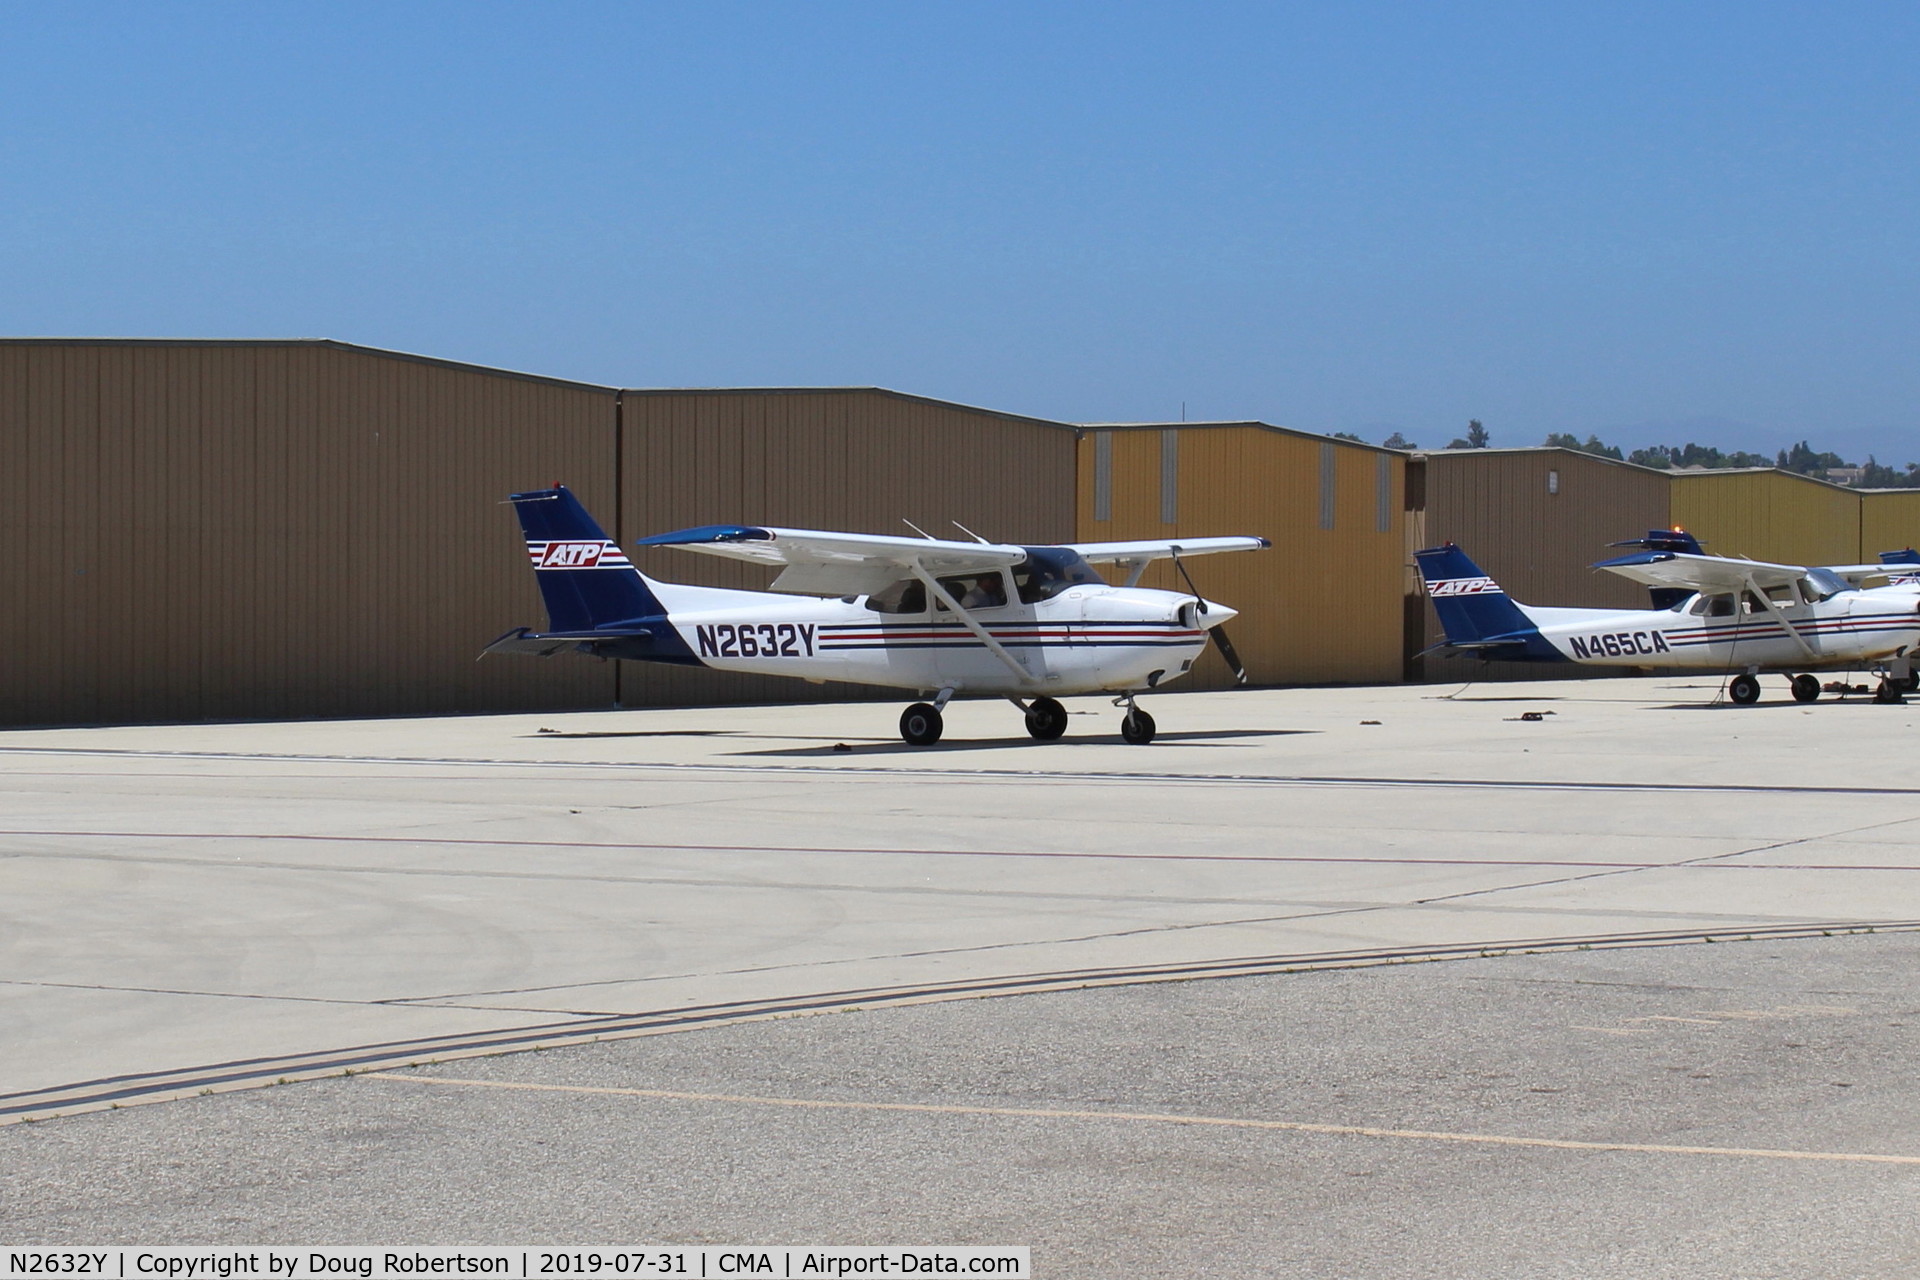 N2632Y, 1998 Cessna 172R C/N 17280570, 1998 Cessna 172R SKYHAWK, Lycoming IO-360-L2A 160 Hp, on Transient Ramp